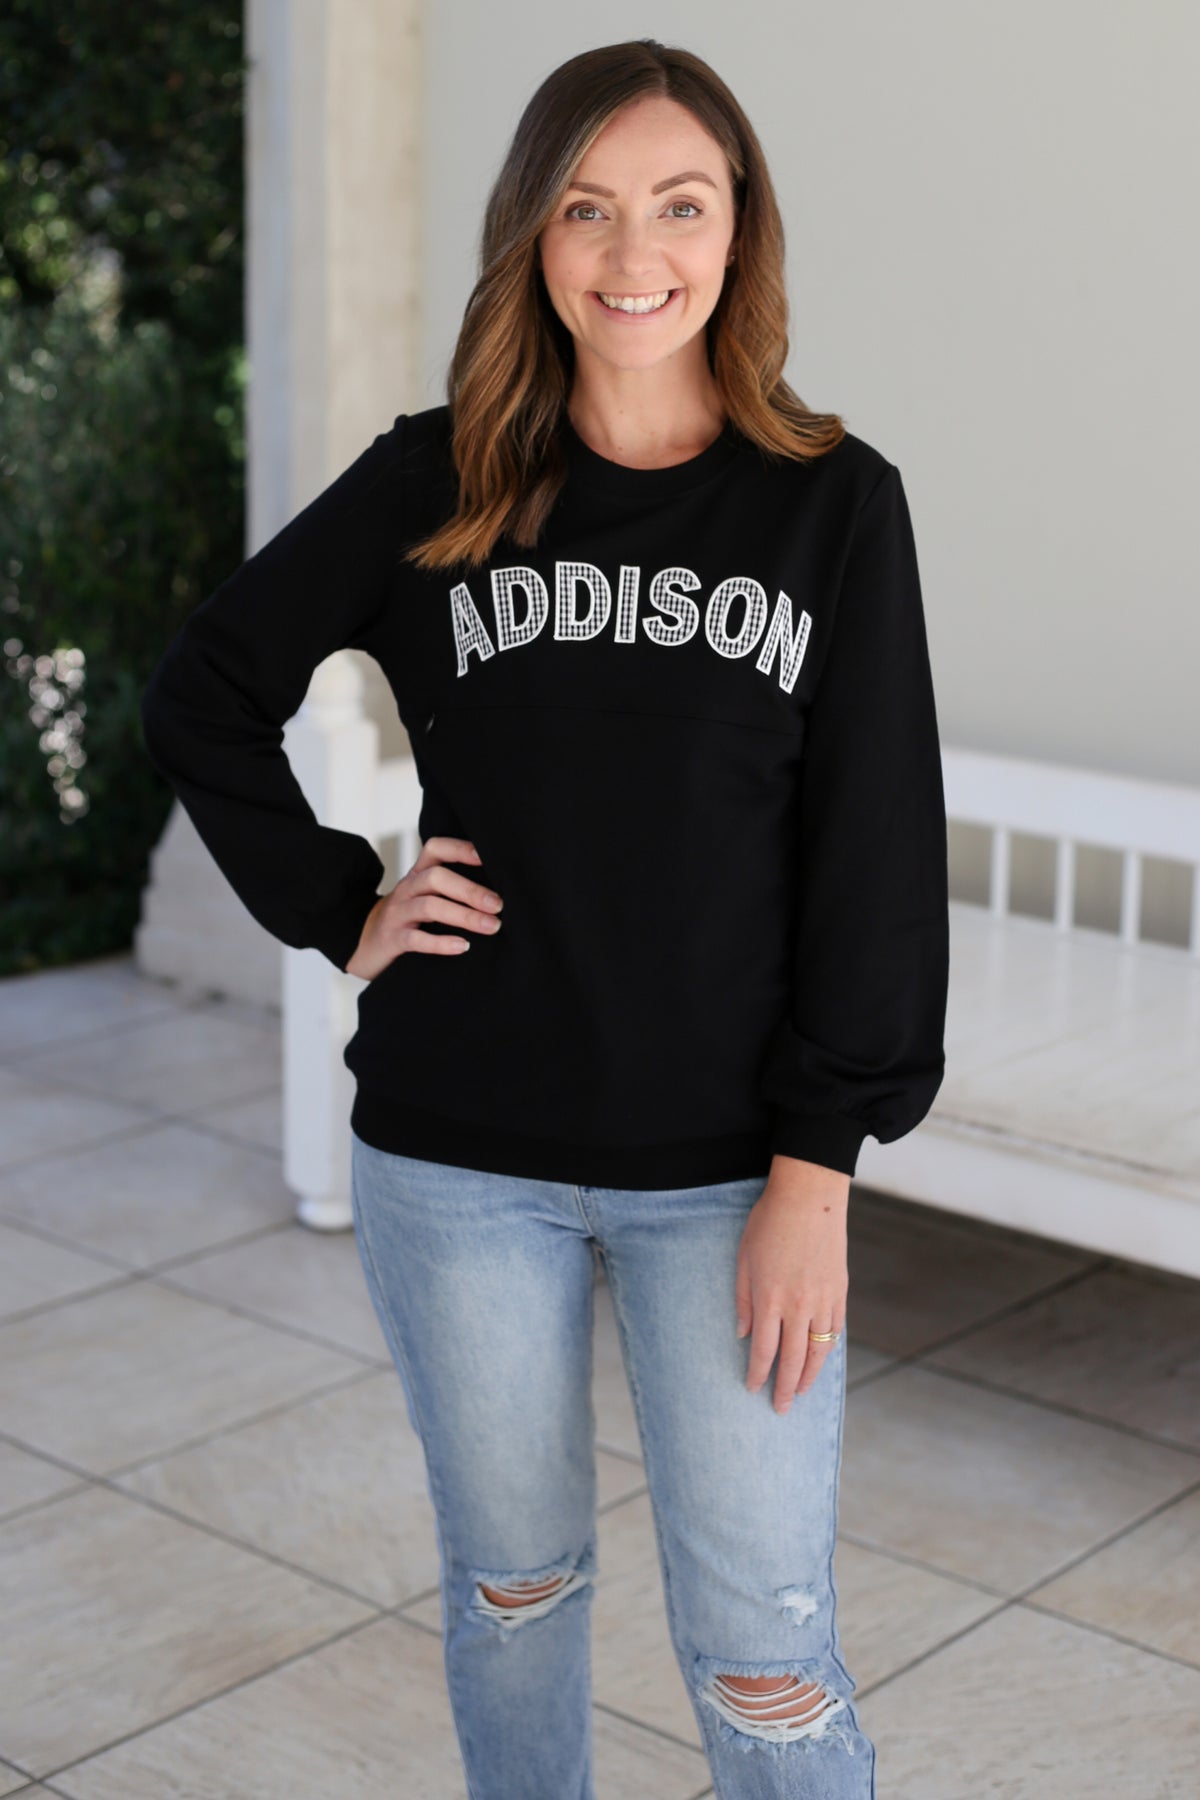 Addison Sweatshirt Black With Gingham